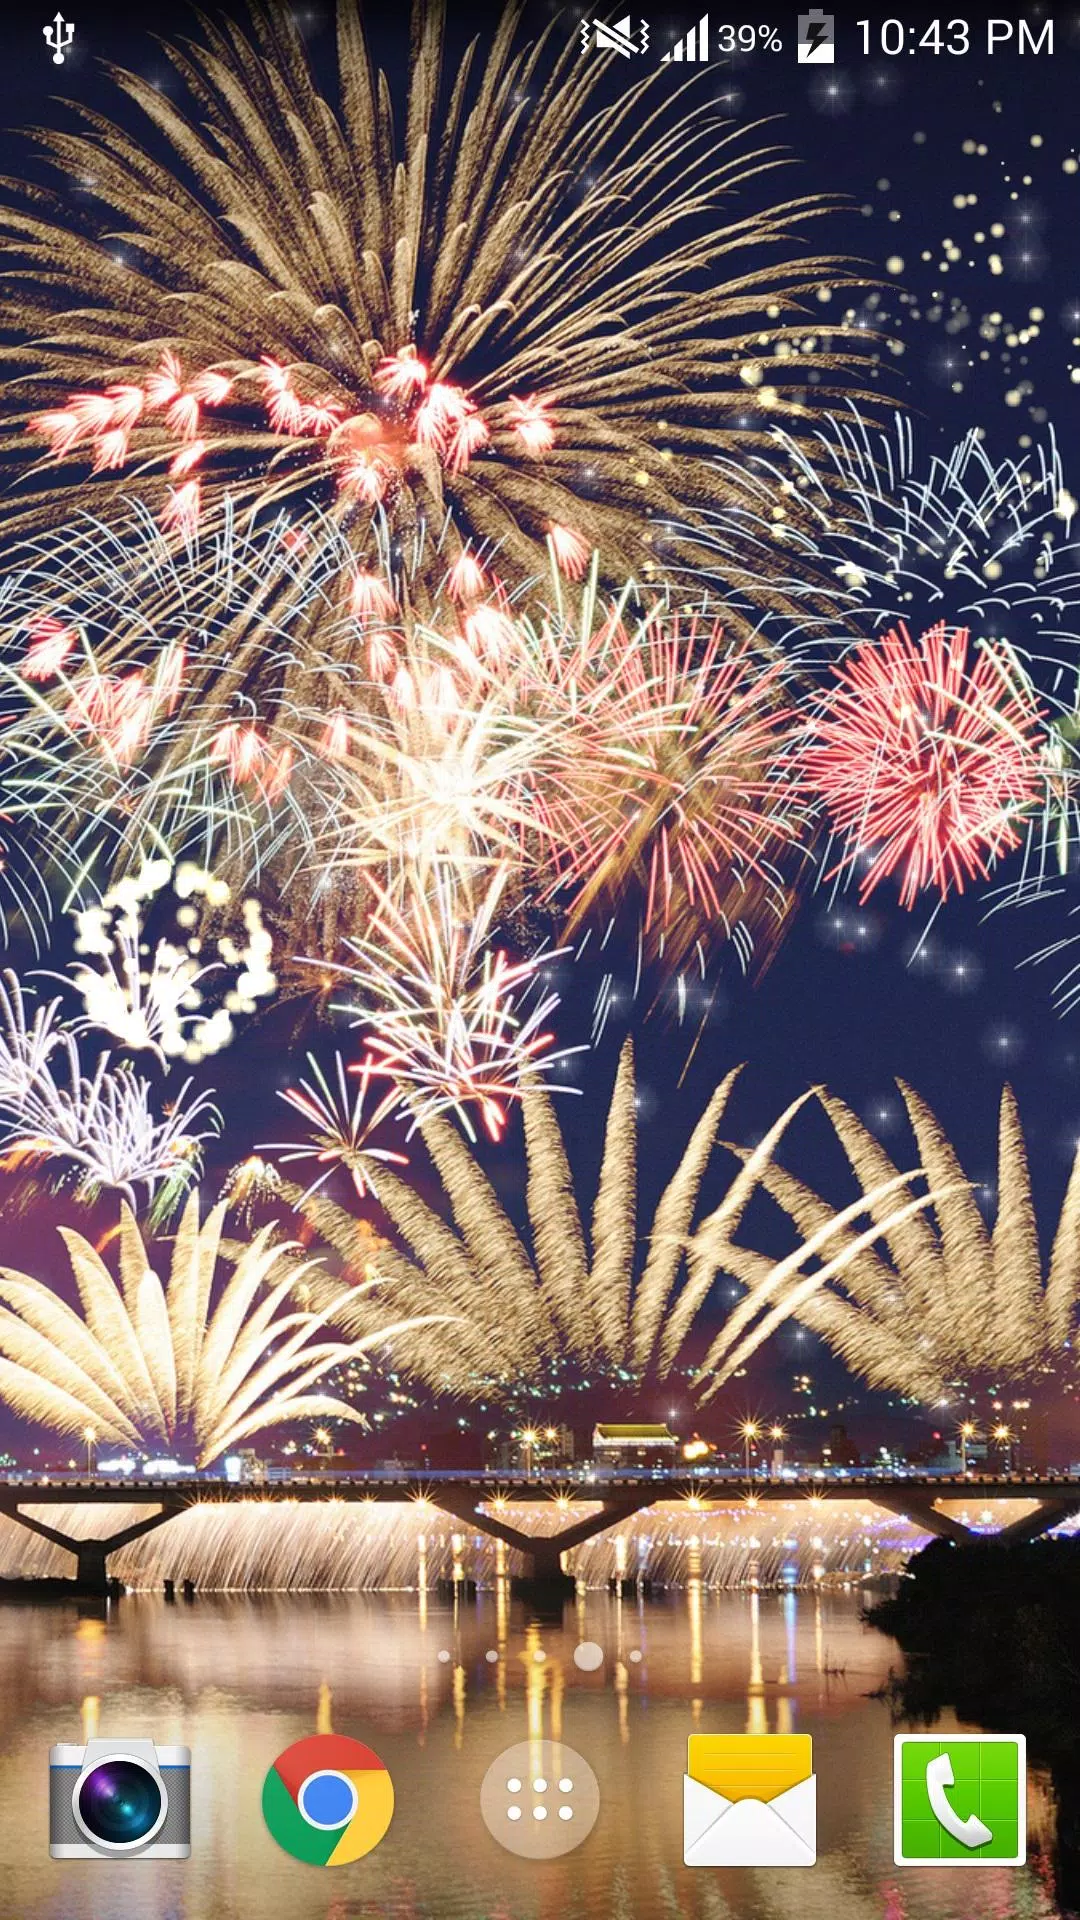 Fireworks Live Wallpaper APK for Android Download